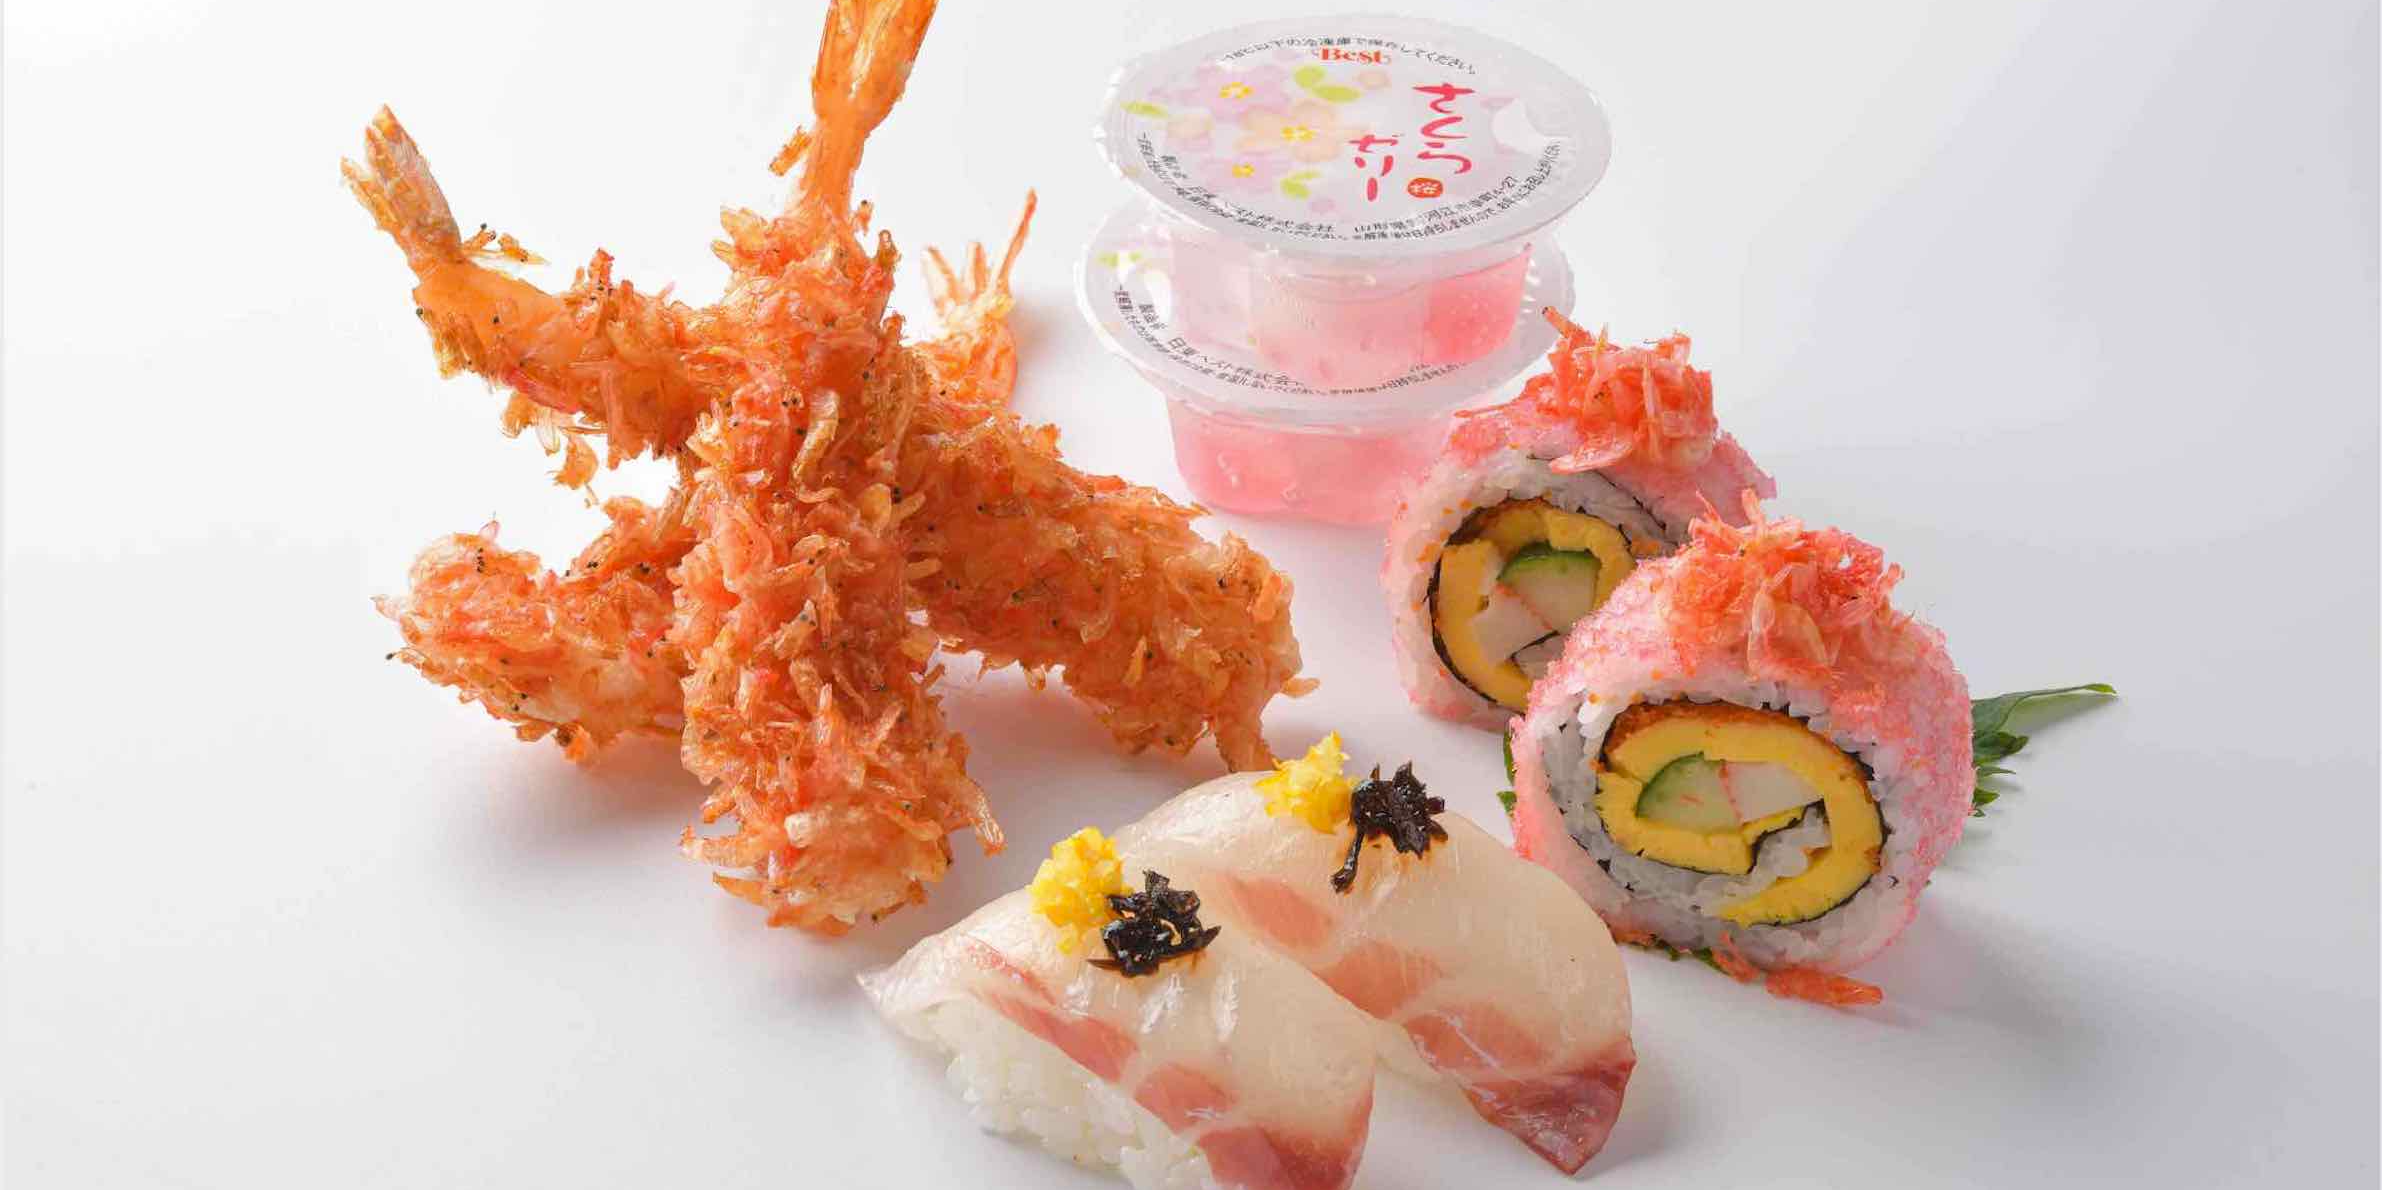 Let Sushi-GO’s Shinkansen train transport the Sakura season to you with these new Ohanami specials from $2.50!